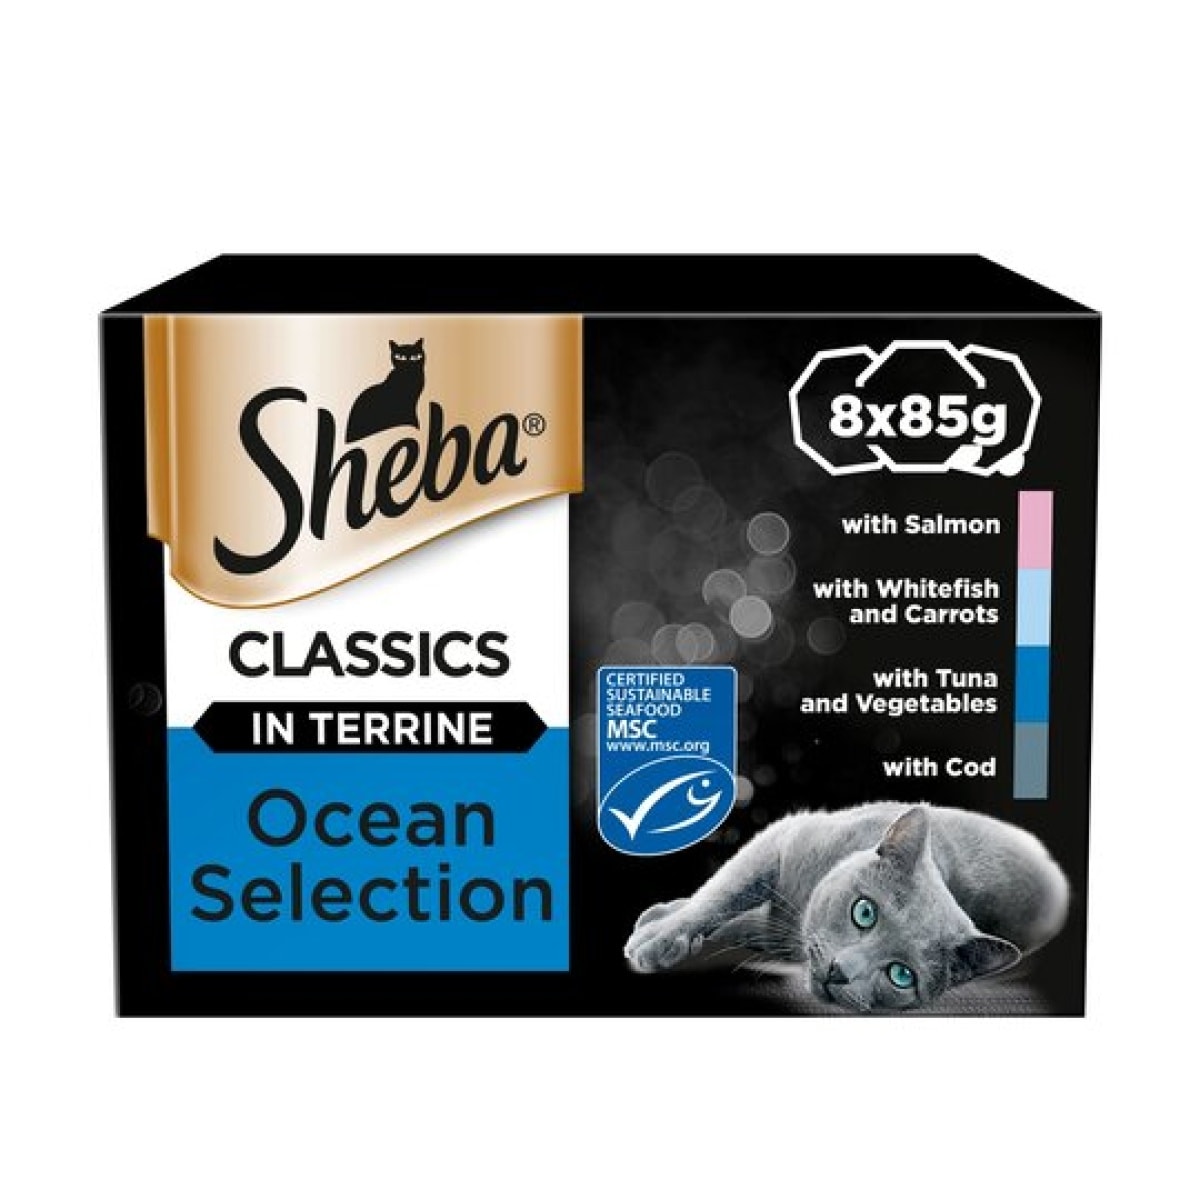 Sheba Alu Classics in Terrine Ocean 8 x 85g – Pawfect Supplies Ltd Product Image